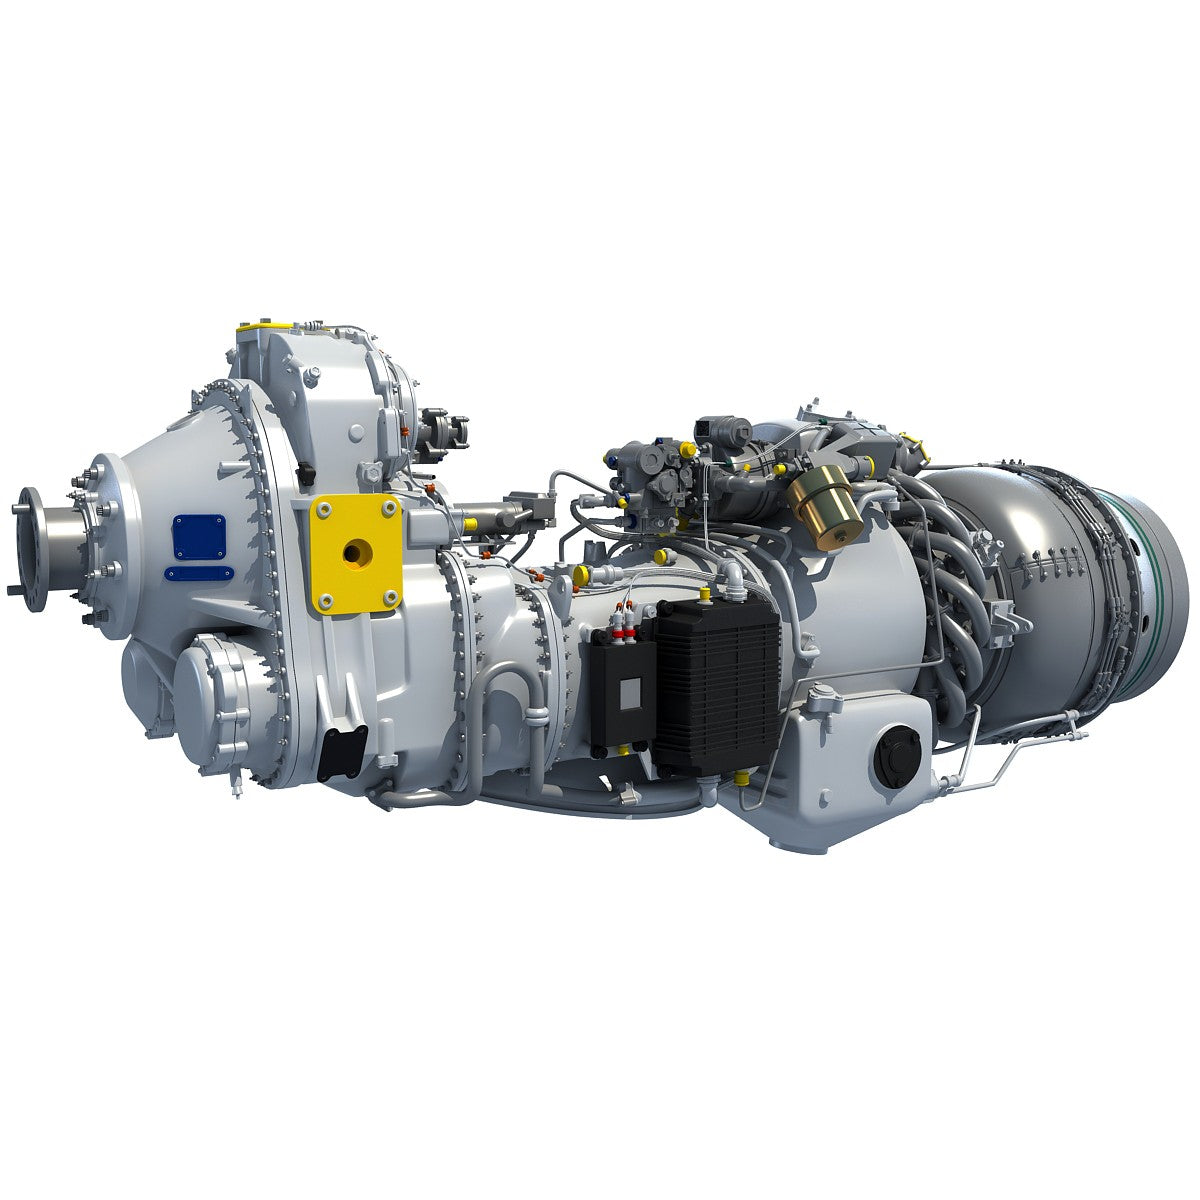 Pratt & Whitney PW100 Turboprop 3D Engine Model